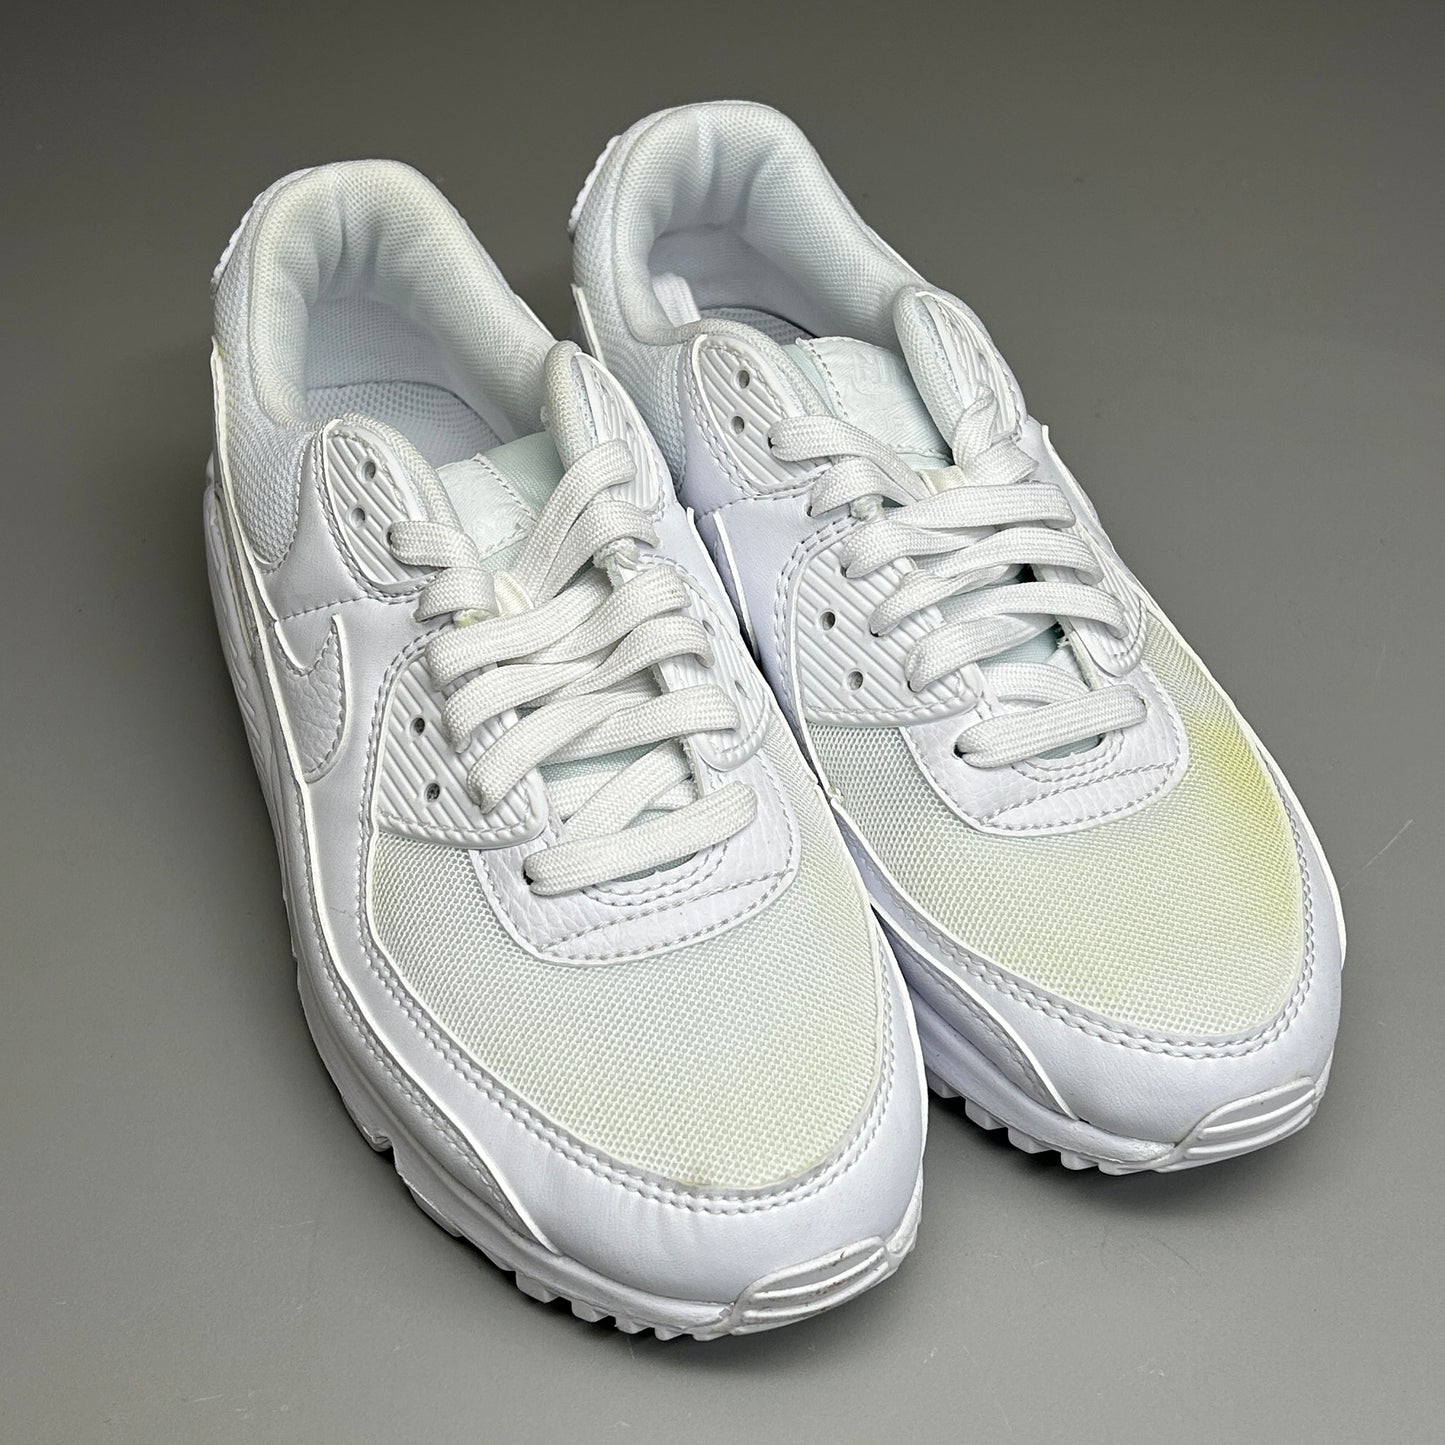 NIKE Nike Air Max 90 Women's Shoes Sz 8.5 White DH8010-100 (New, Damaged)